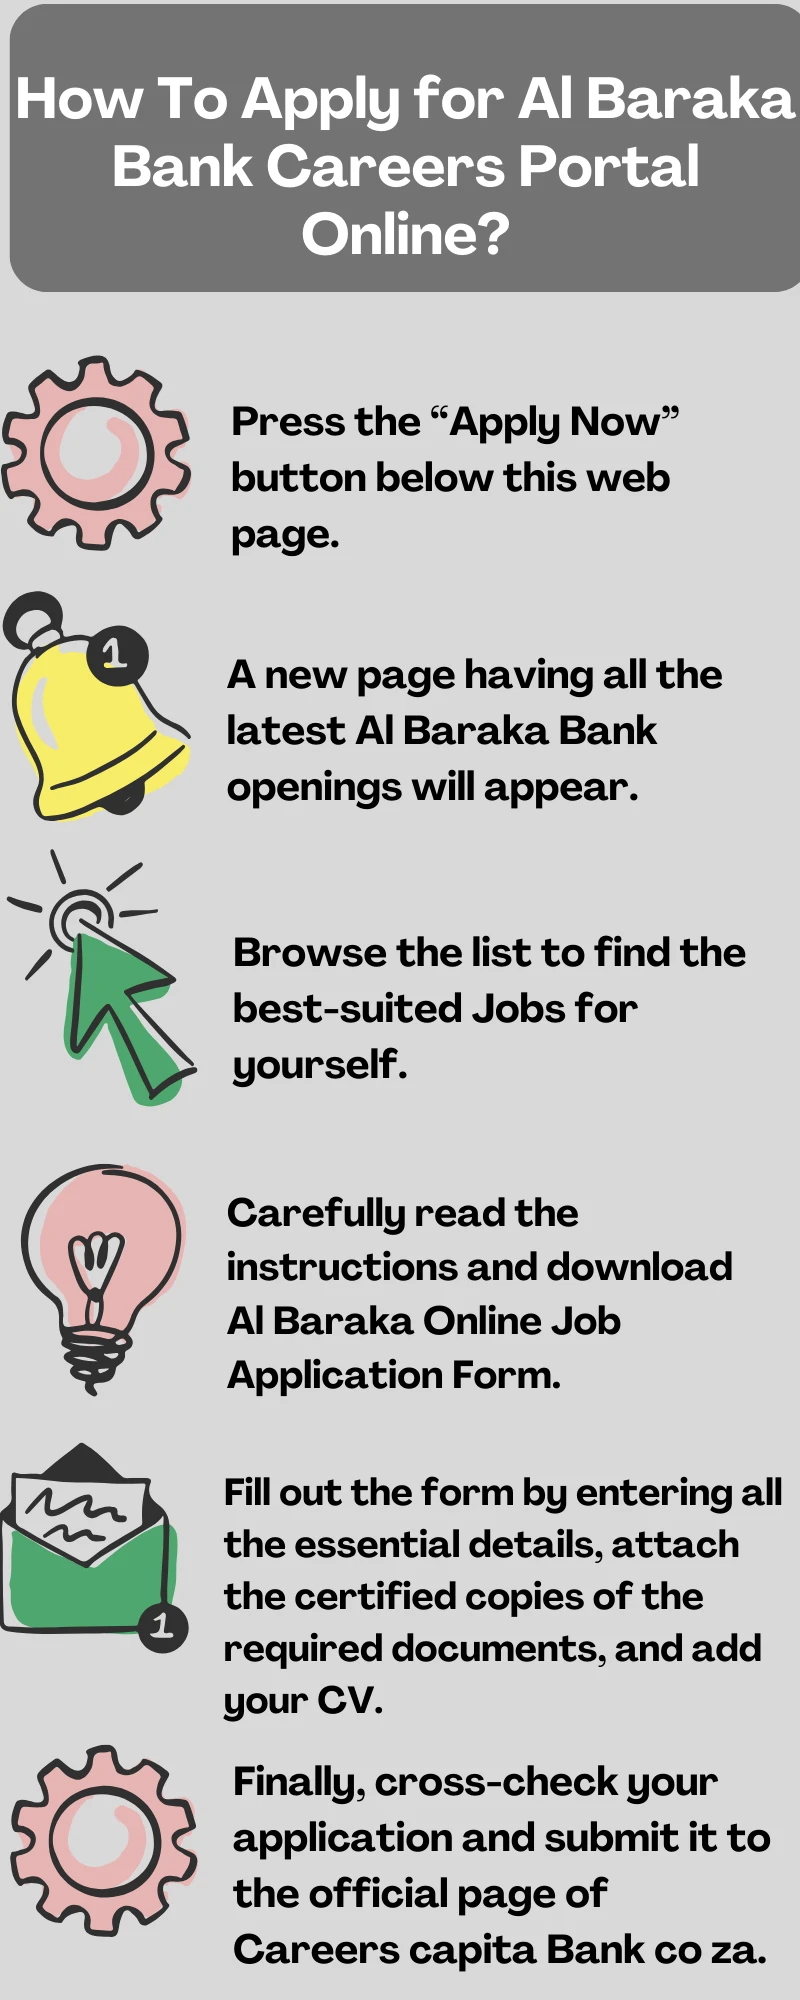 How To Apply for Al Baraka Bank Careers Portal Online?